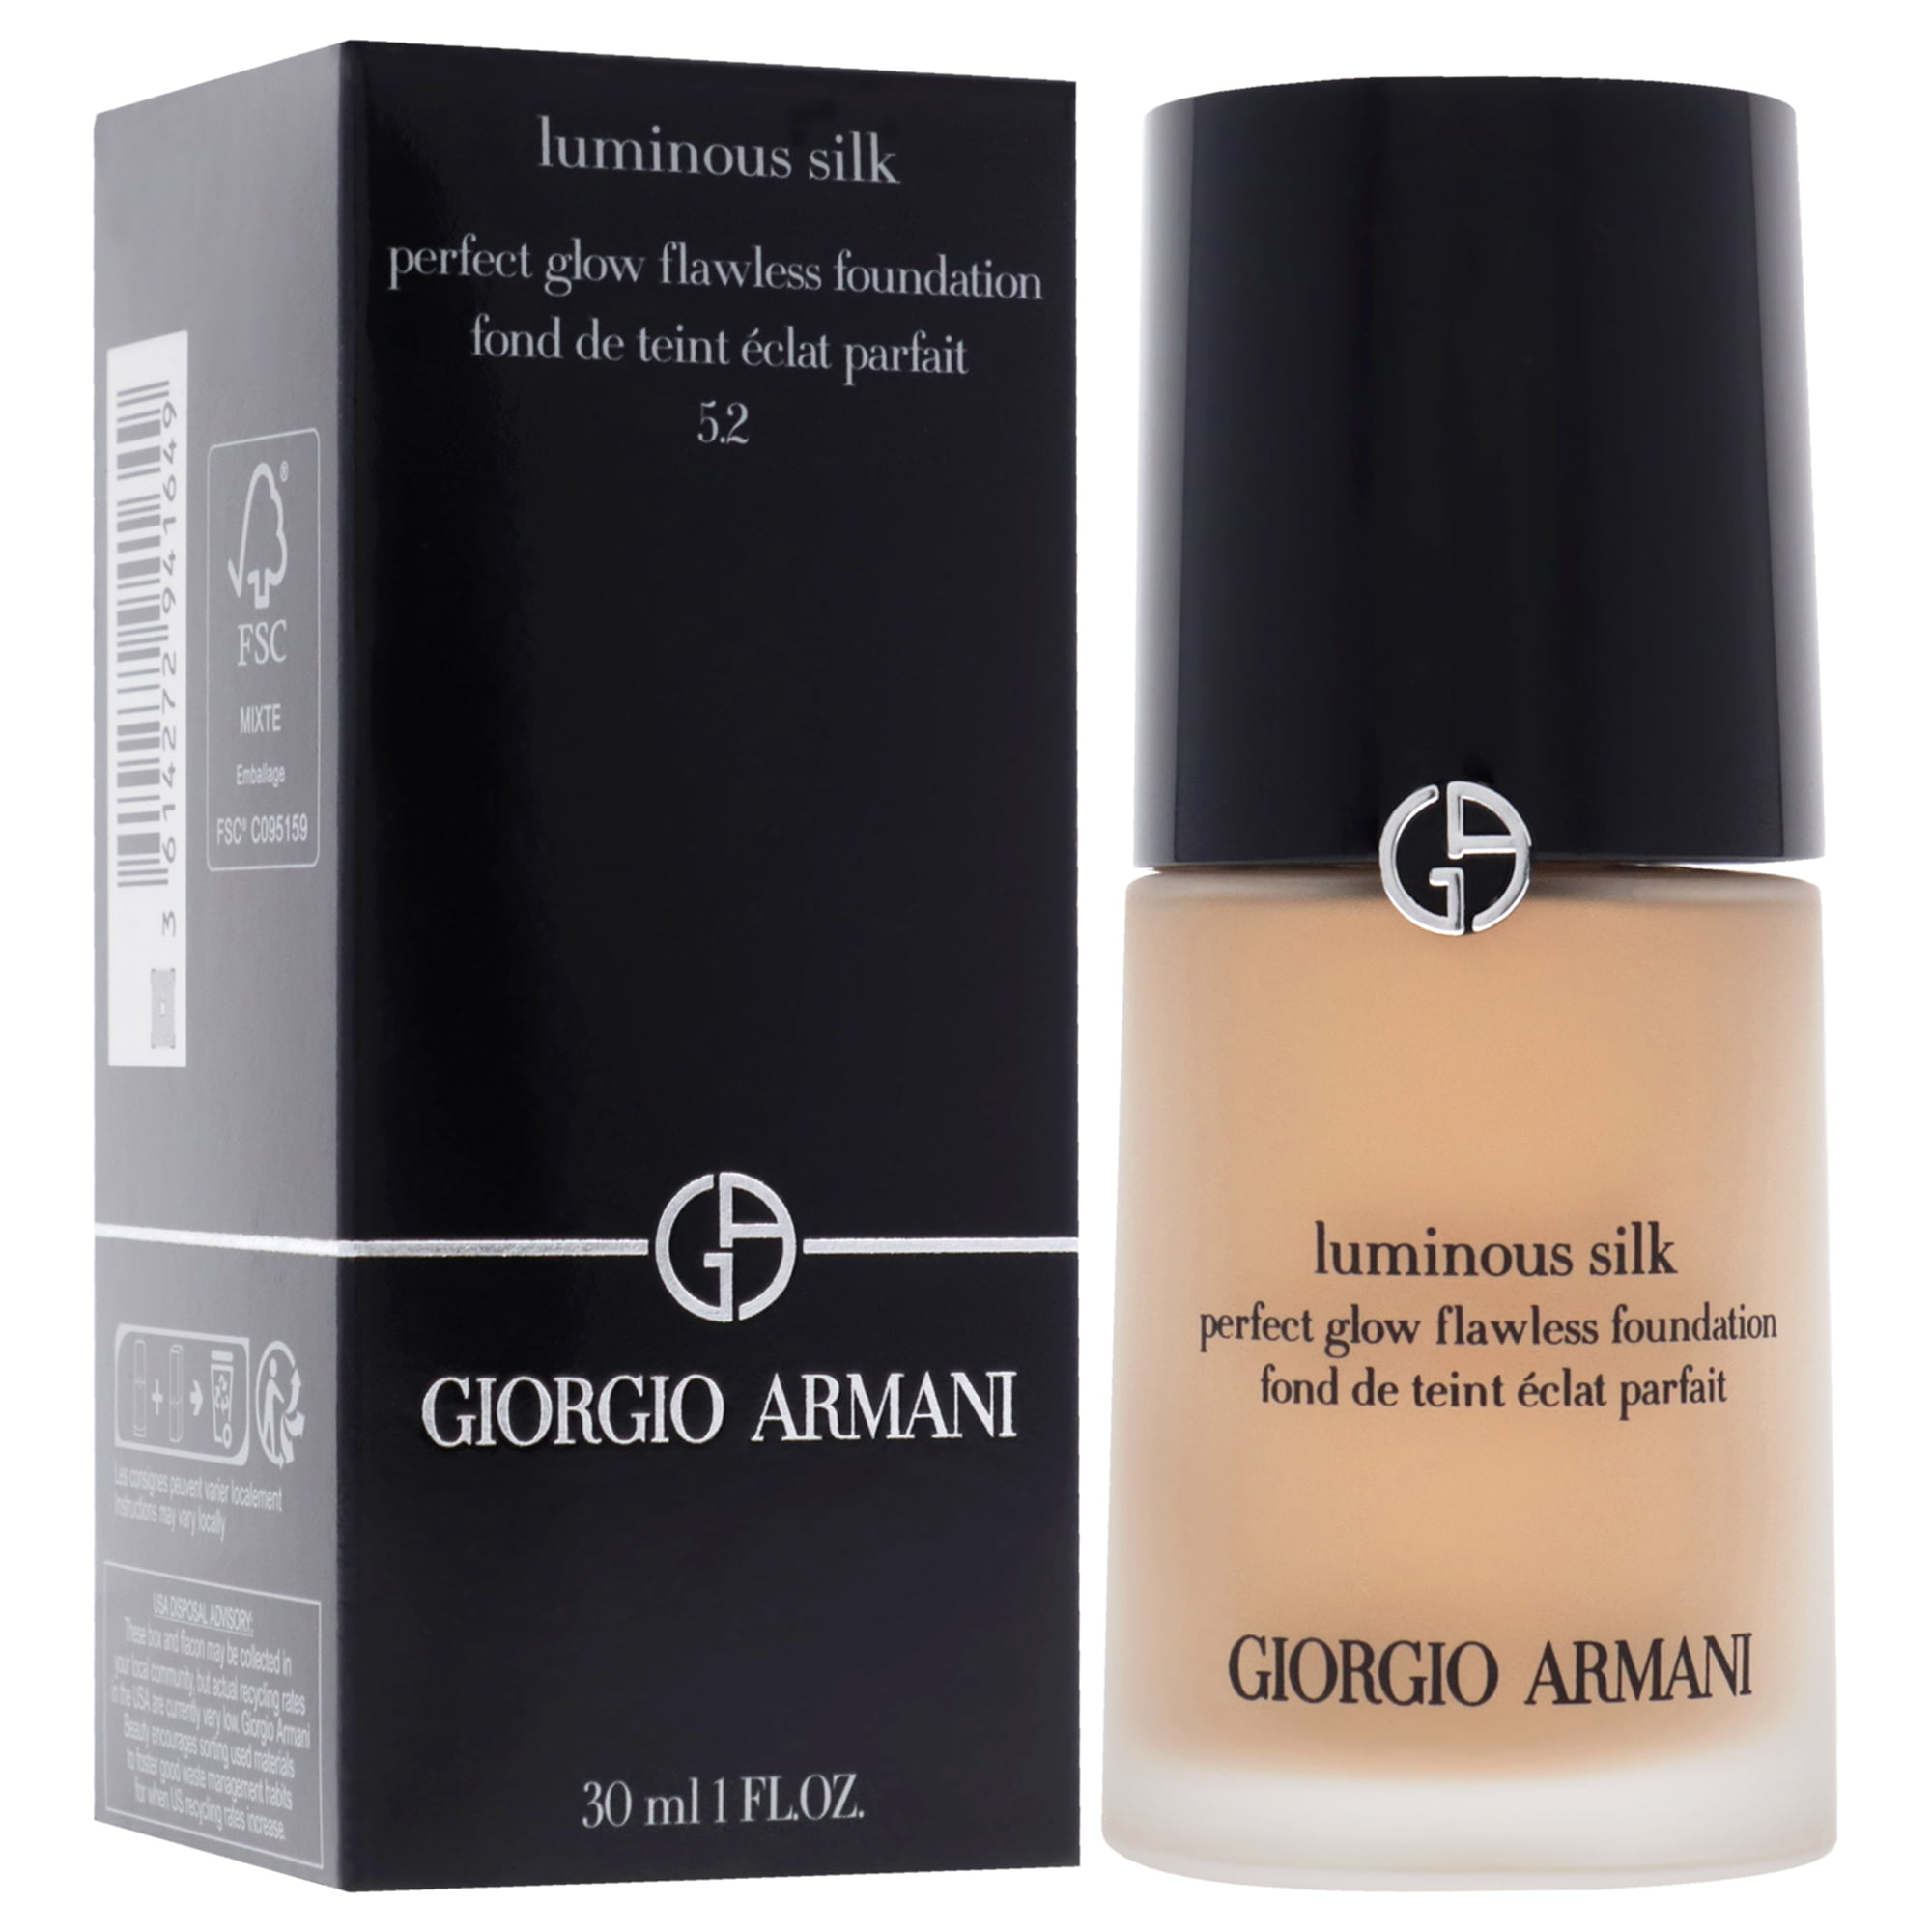  GIORGIO ARMANI Luminous Silk Foundation 1oz # 4.75 BNIB, no.  04.75, 1 Count : Foundation Makeup : Beauty & Personal Care